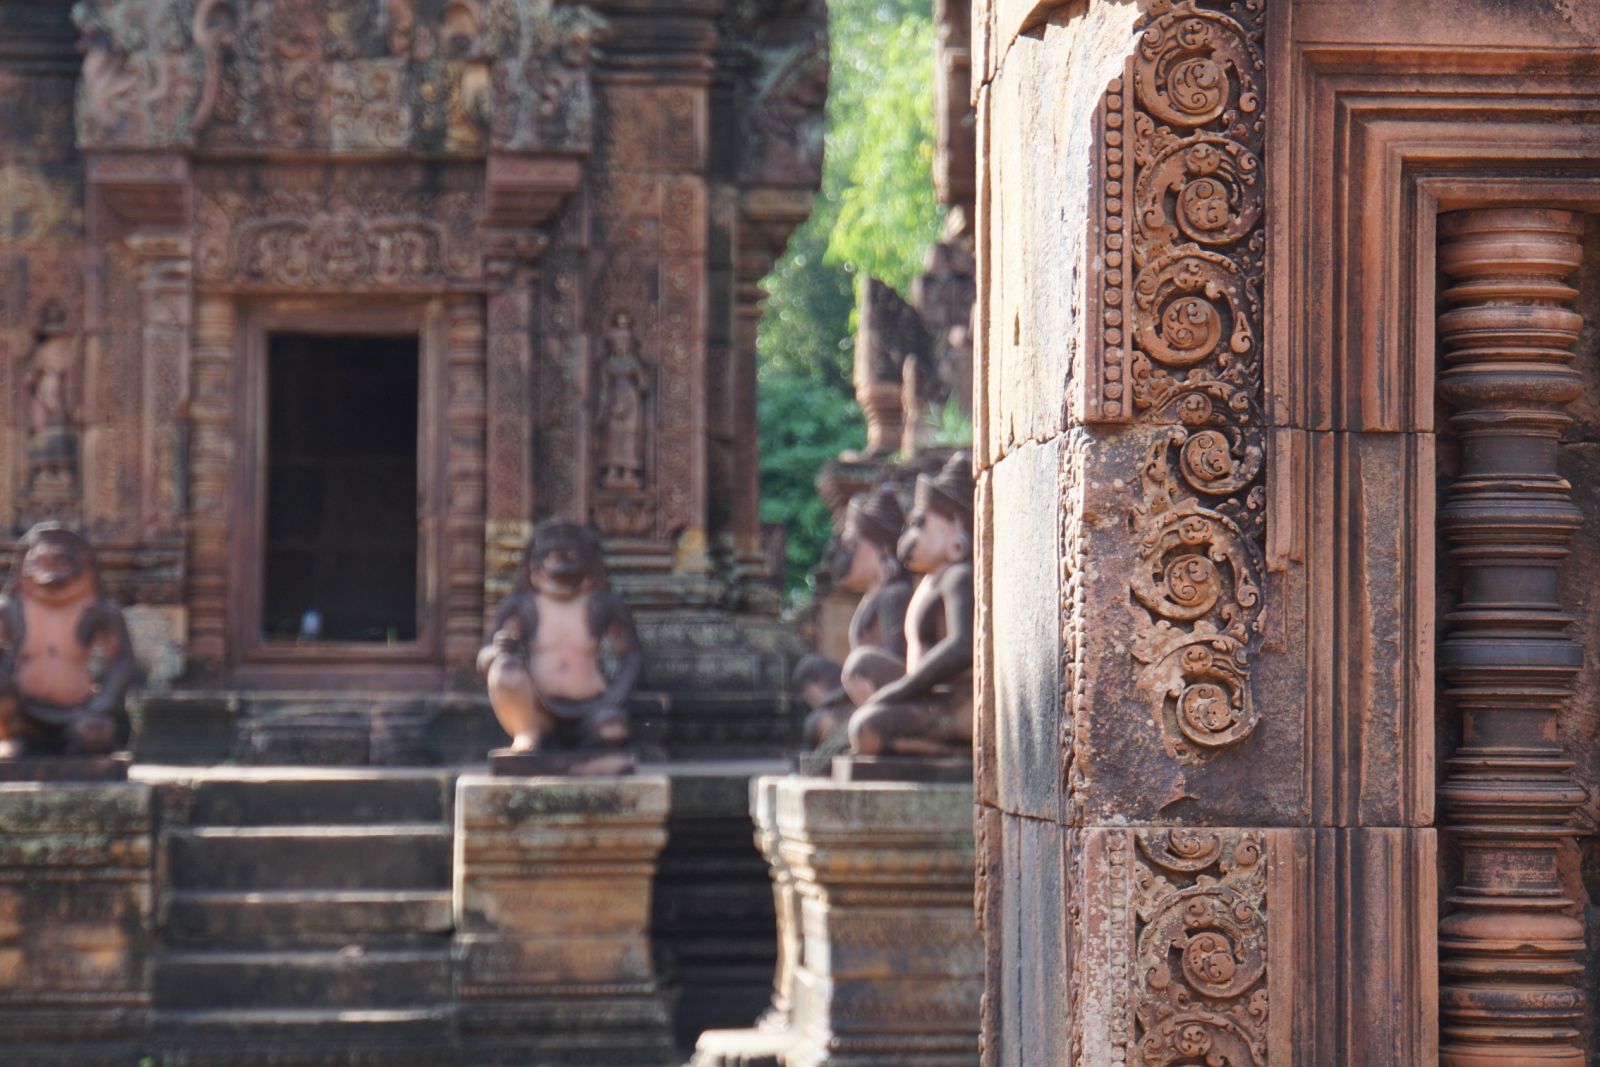 Der Banteay Srey Tempel ist voller Details